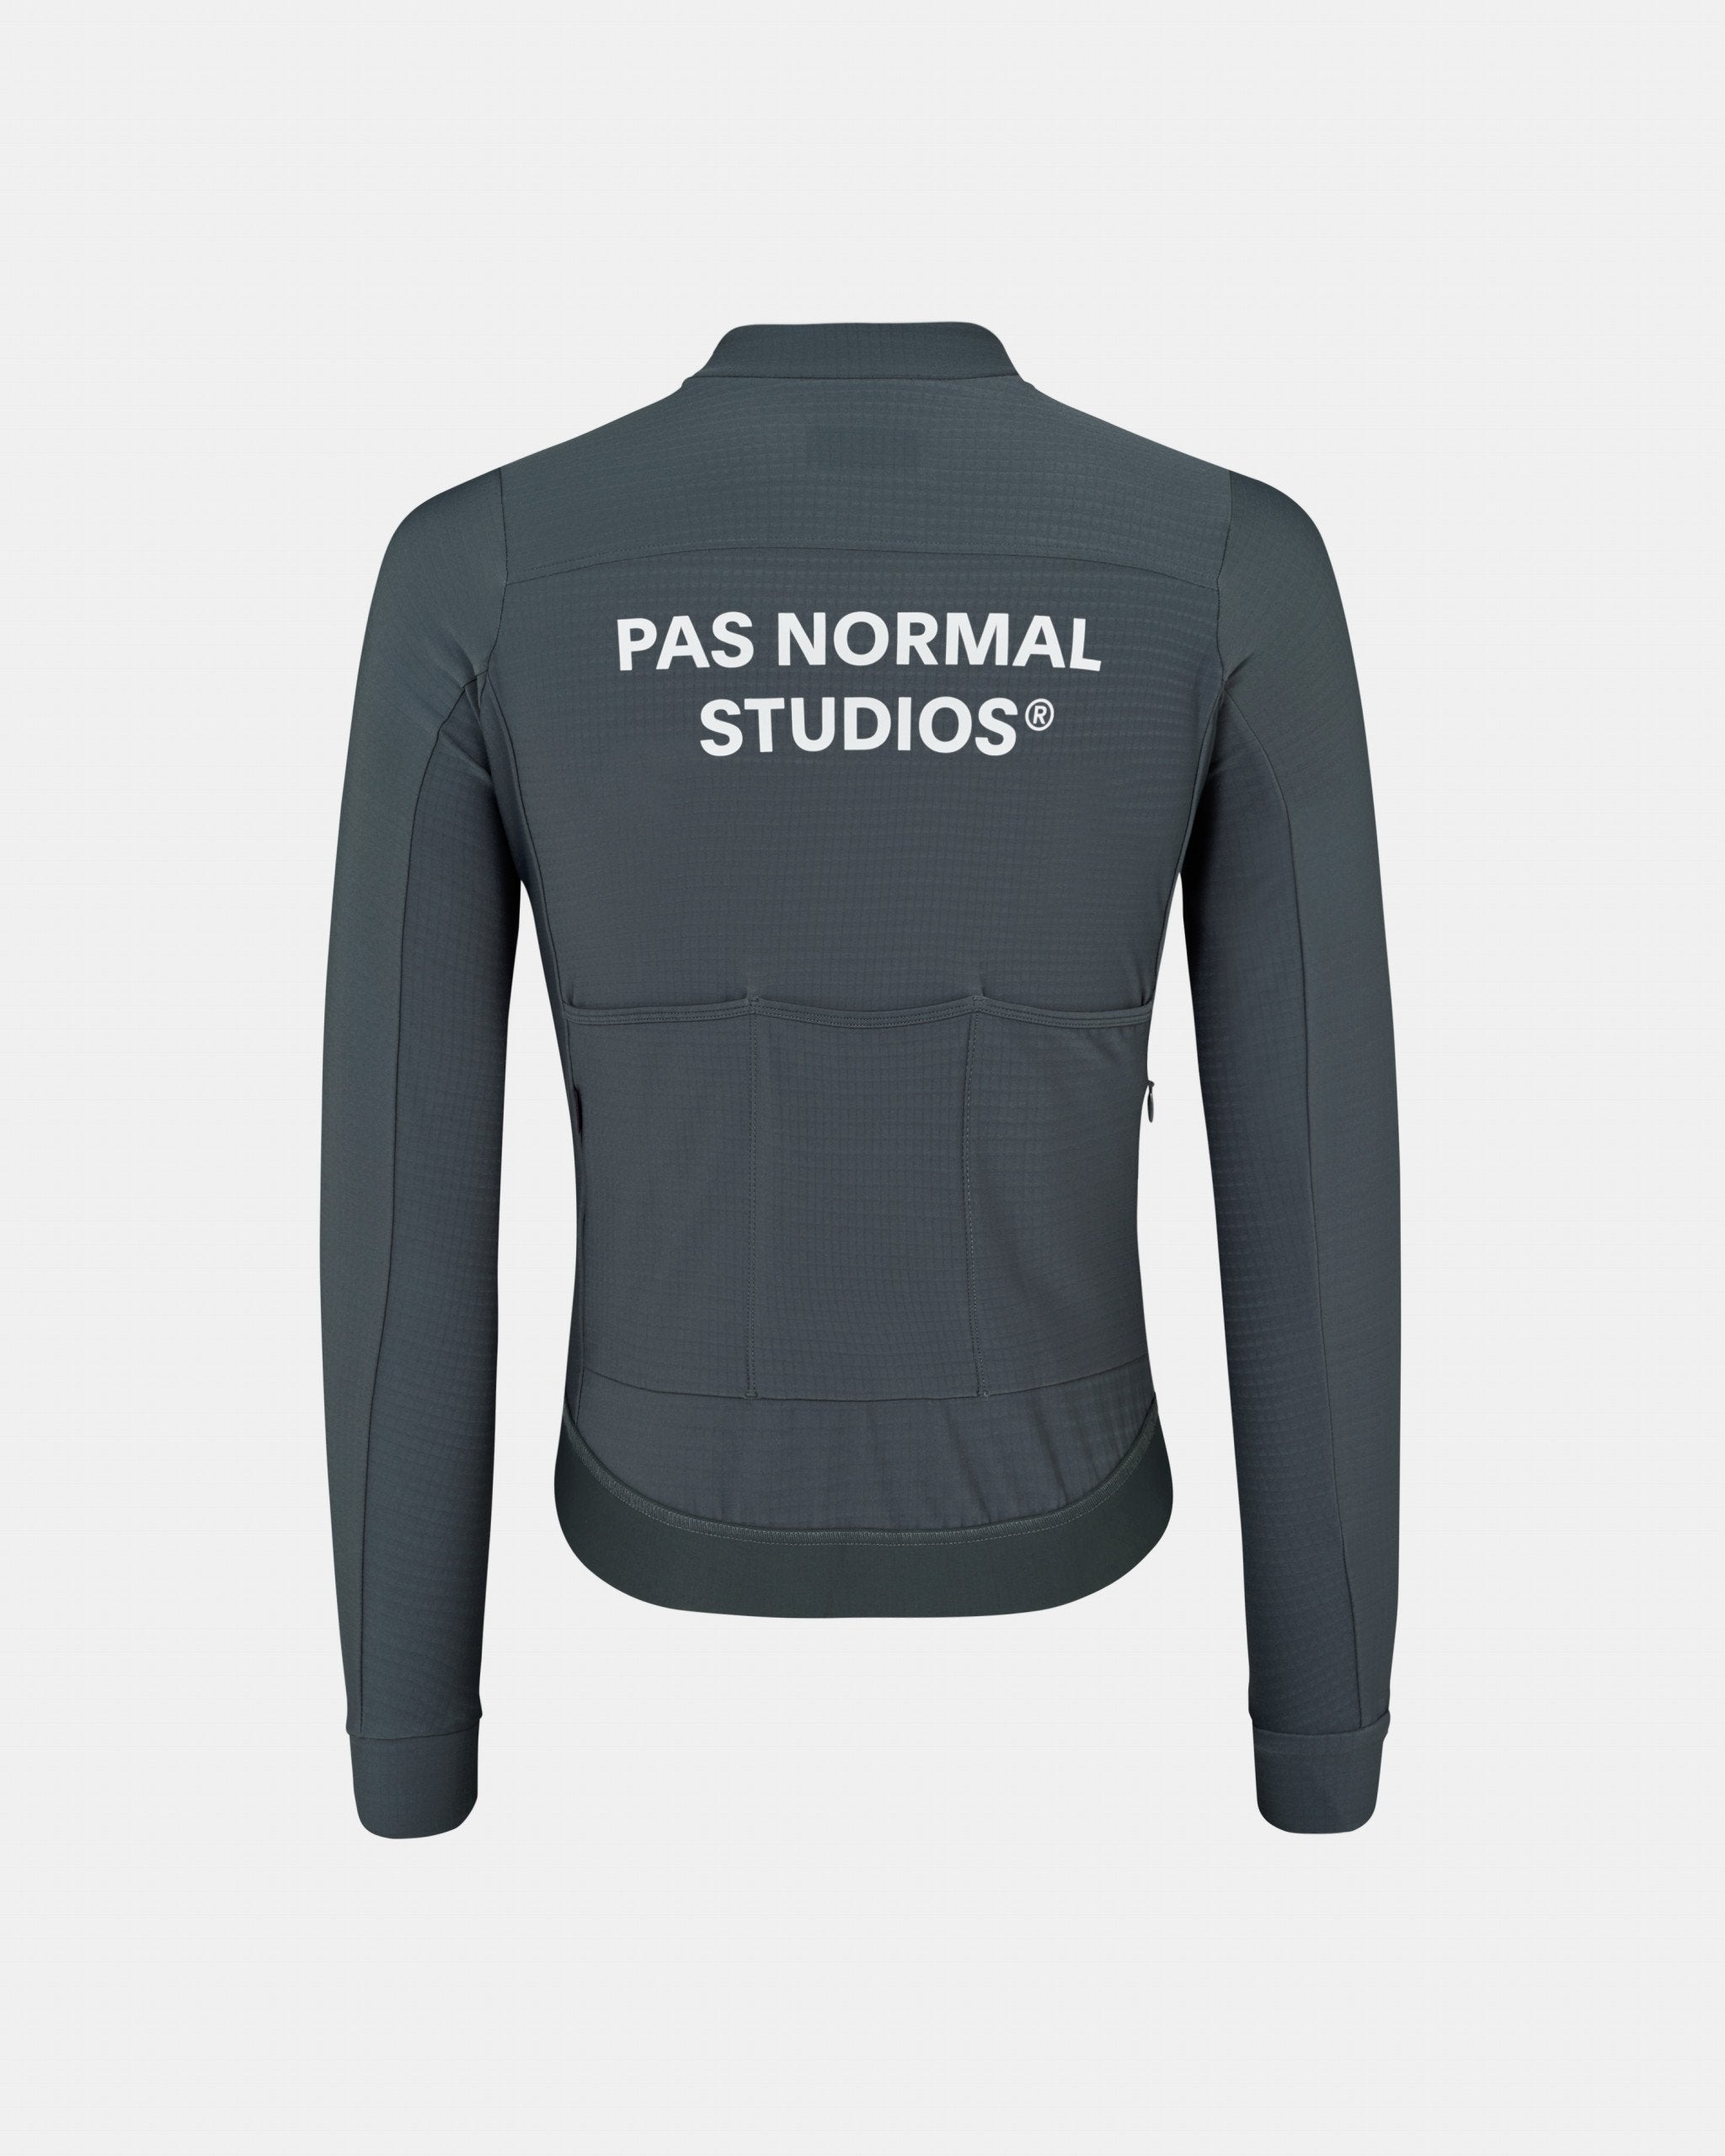 Pas Normal Studios Essentials Long Sleeve Jersey - Dark grey